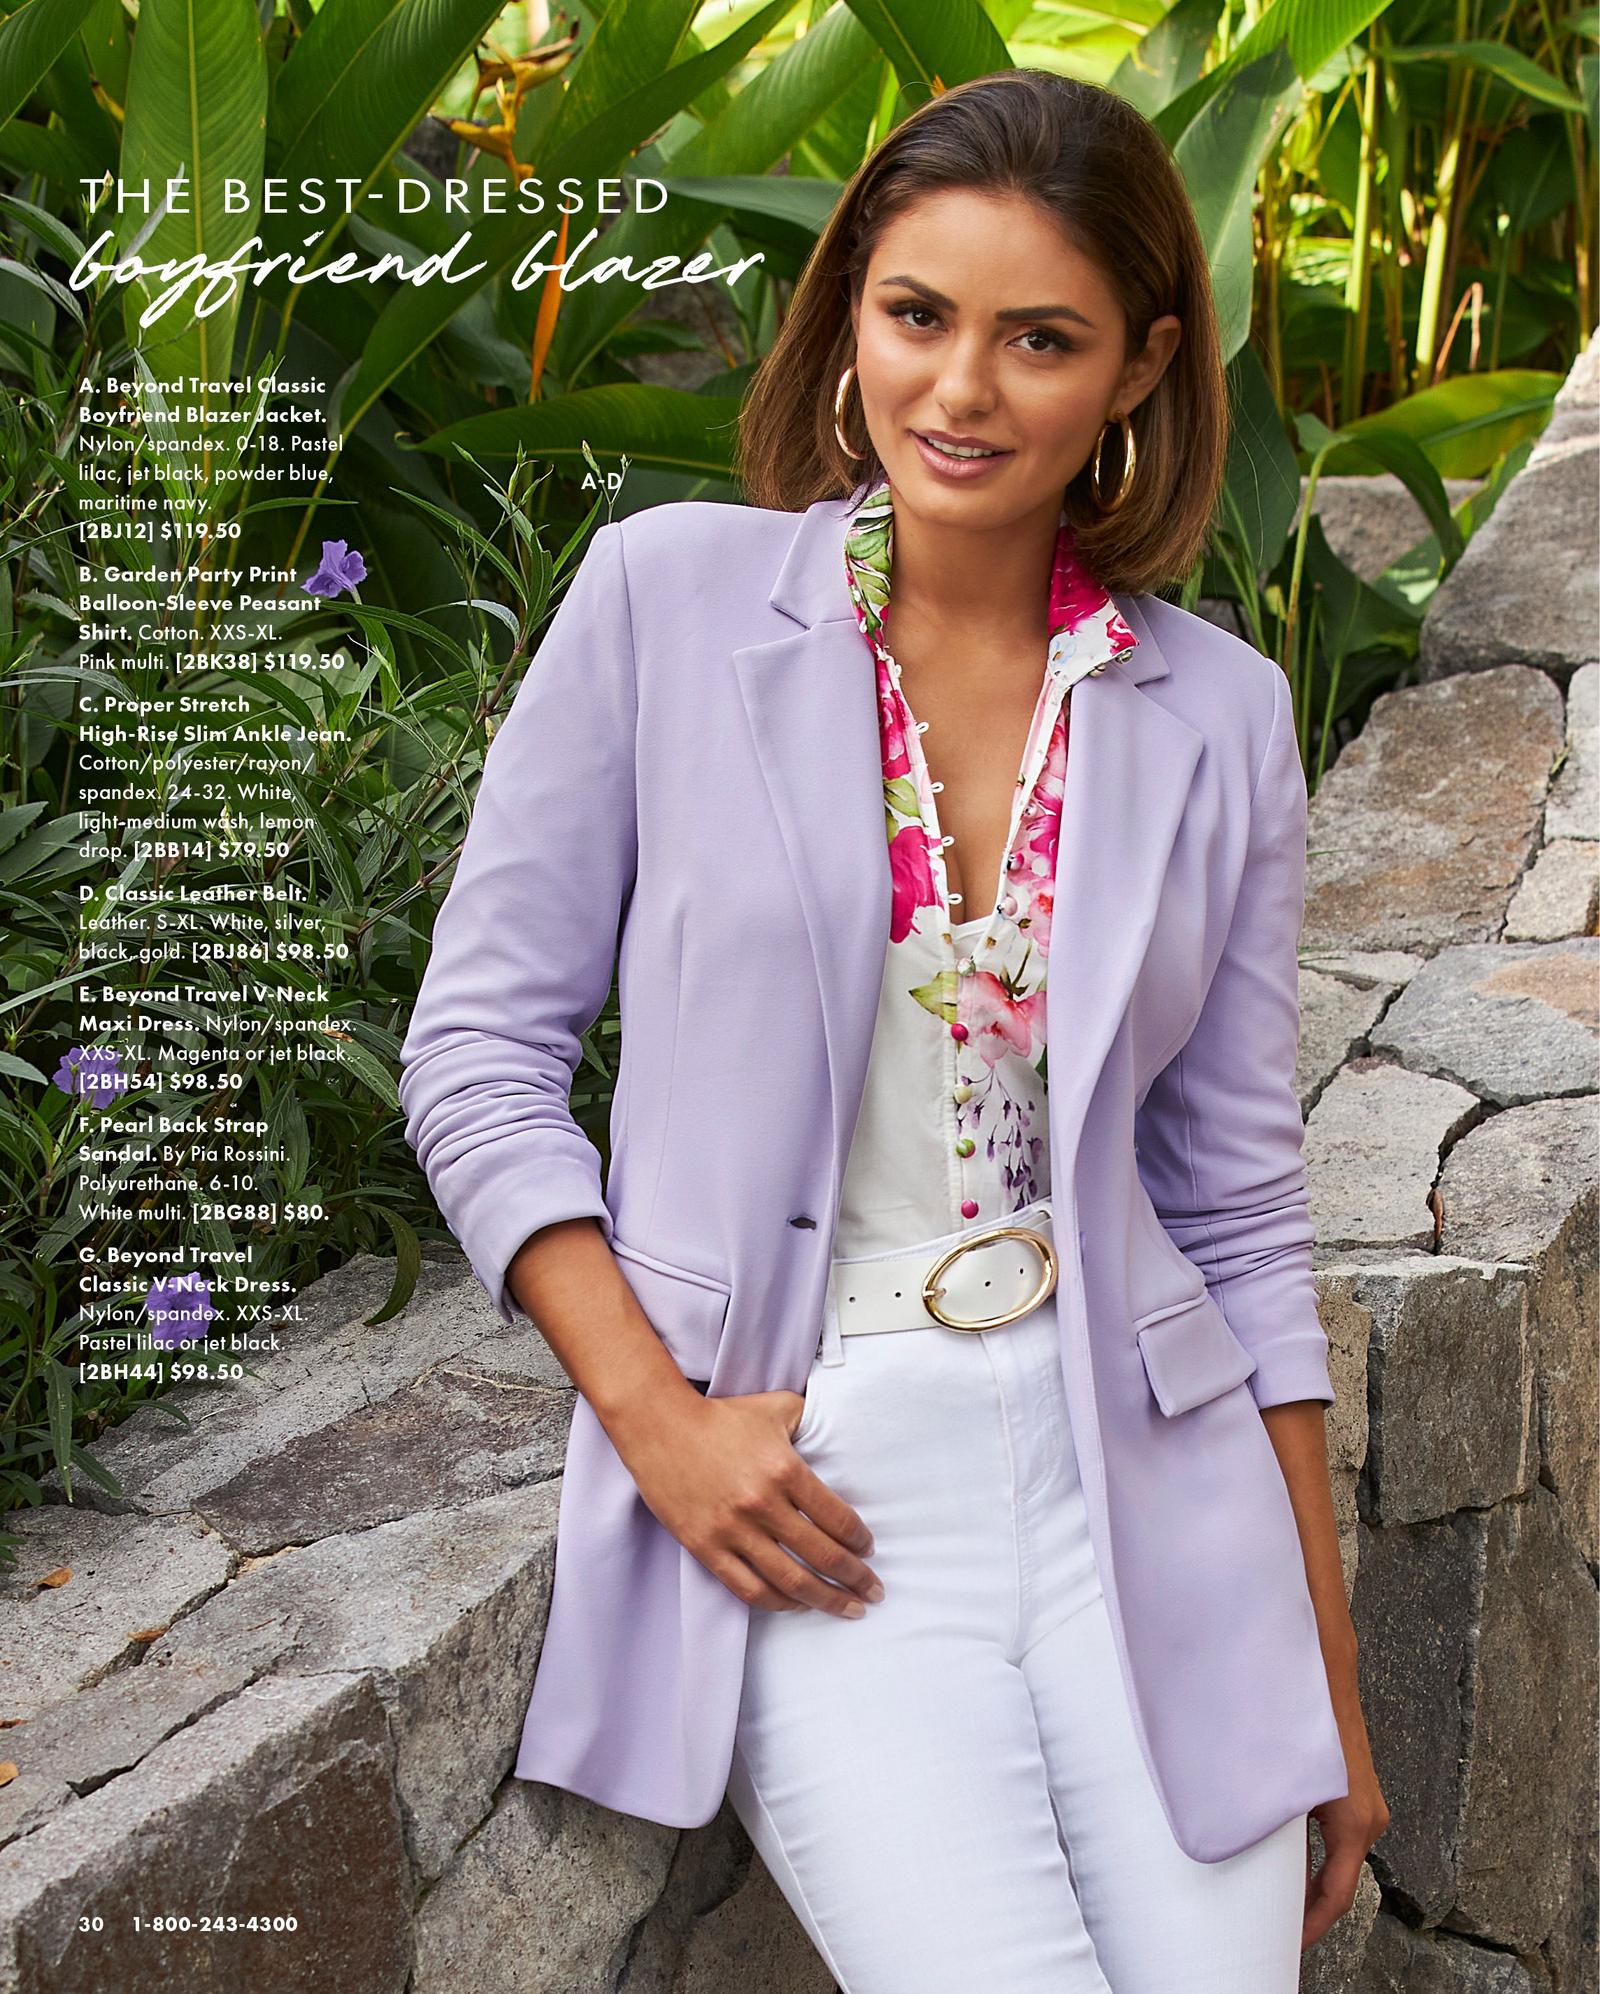 model wearing a lavender blazer, flower print button-down shirt, white belt, white jeans, and gold hoop earrings.